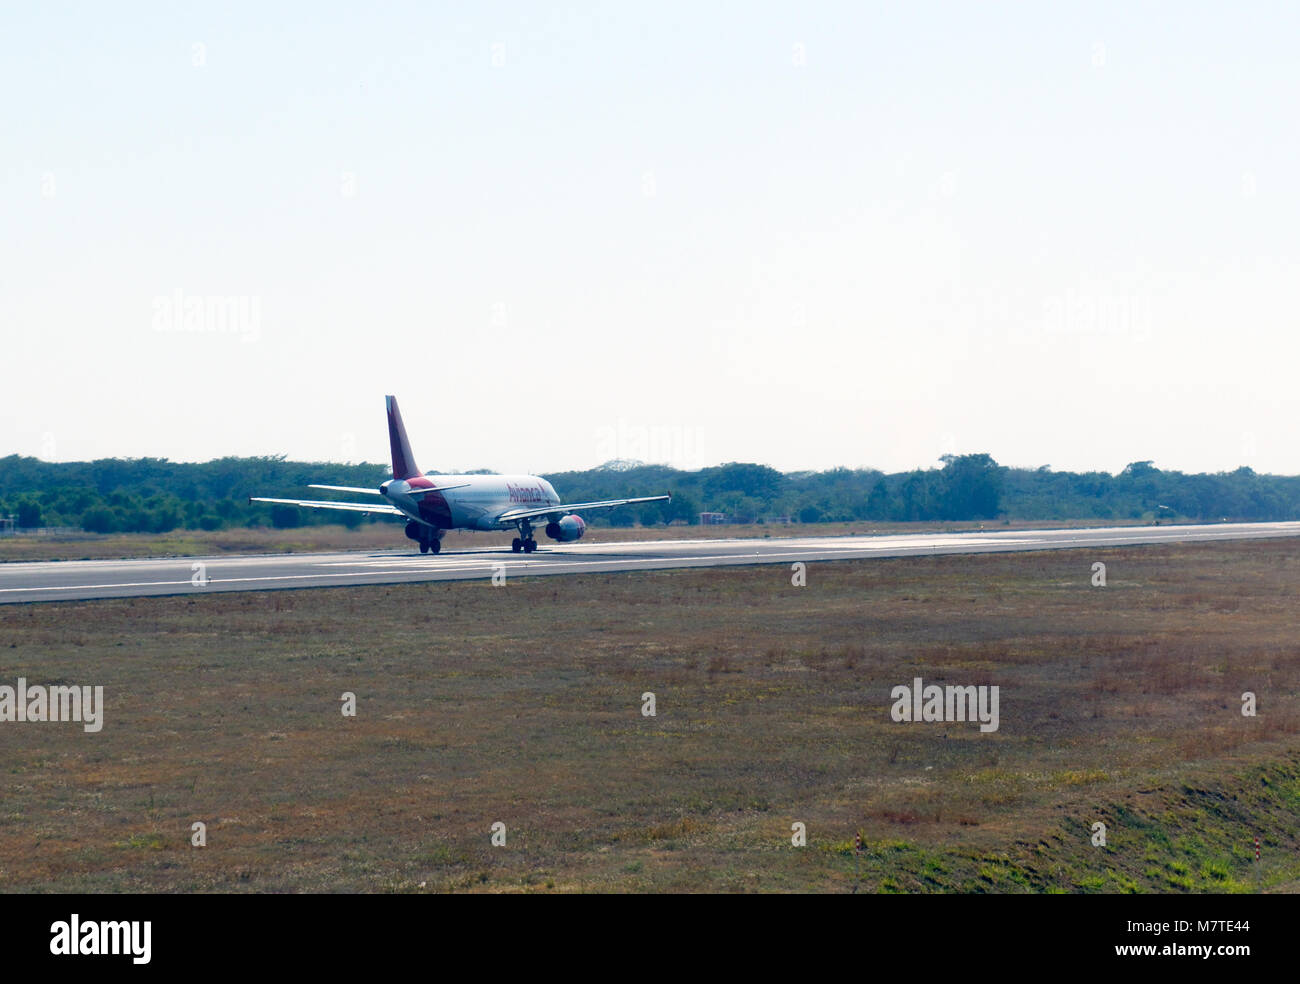 Avianca Airlines plane taking off at San Salvador airport, El Salvador Stock Photo